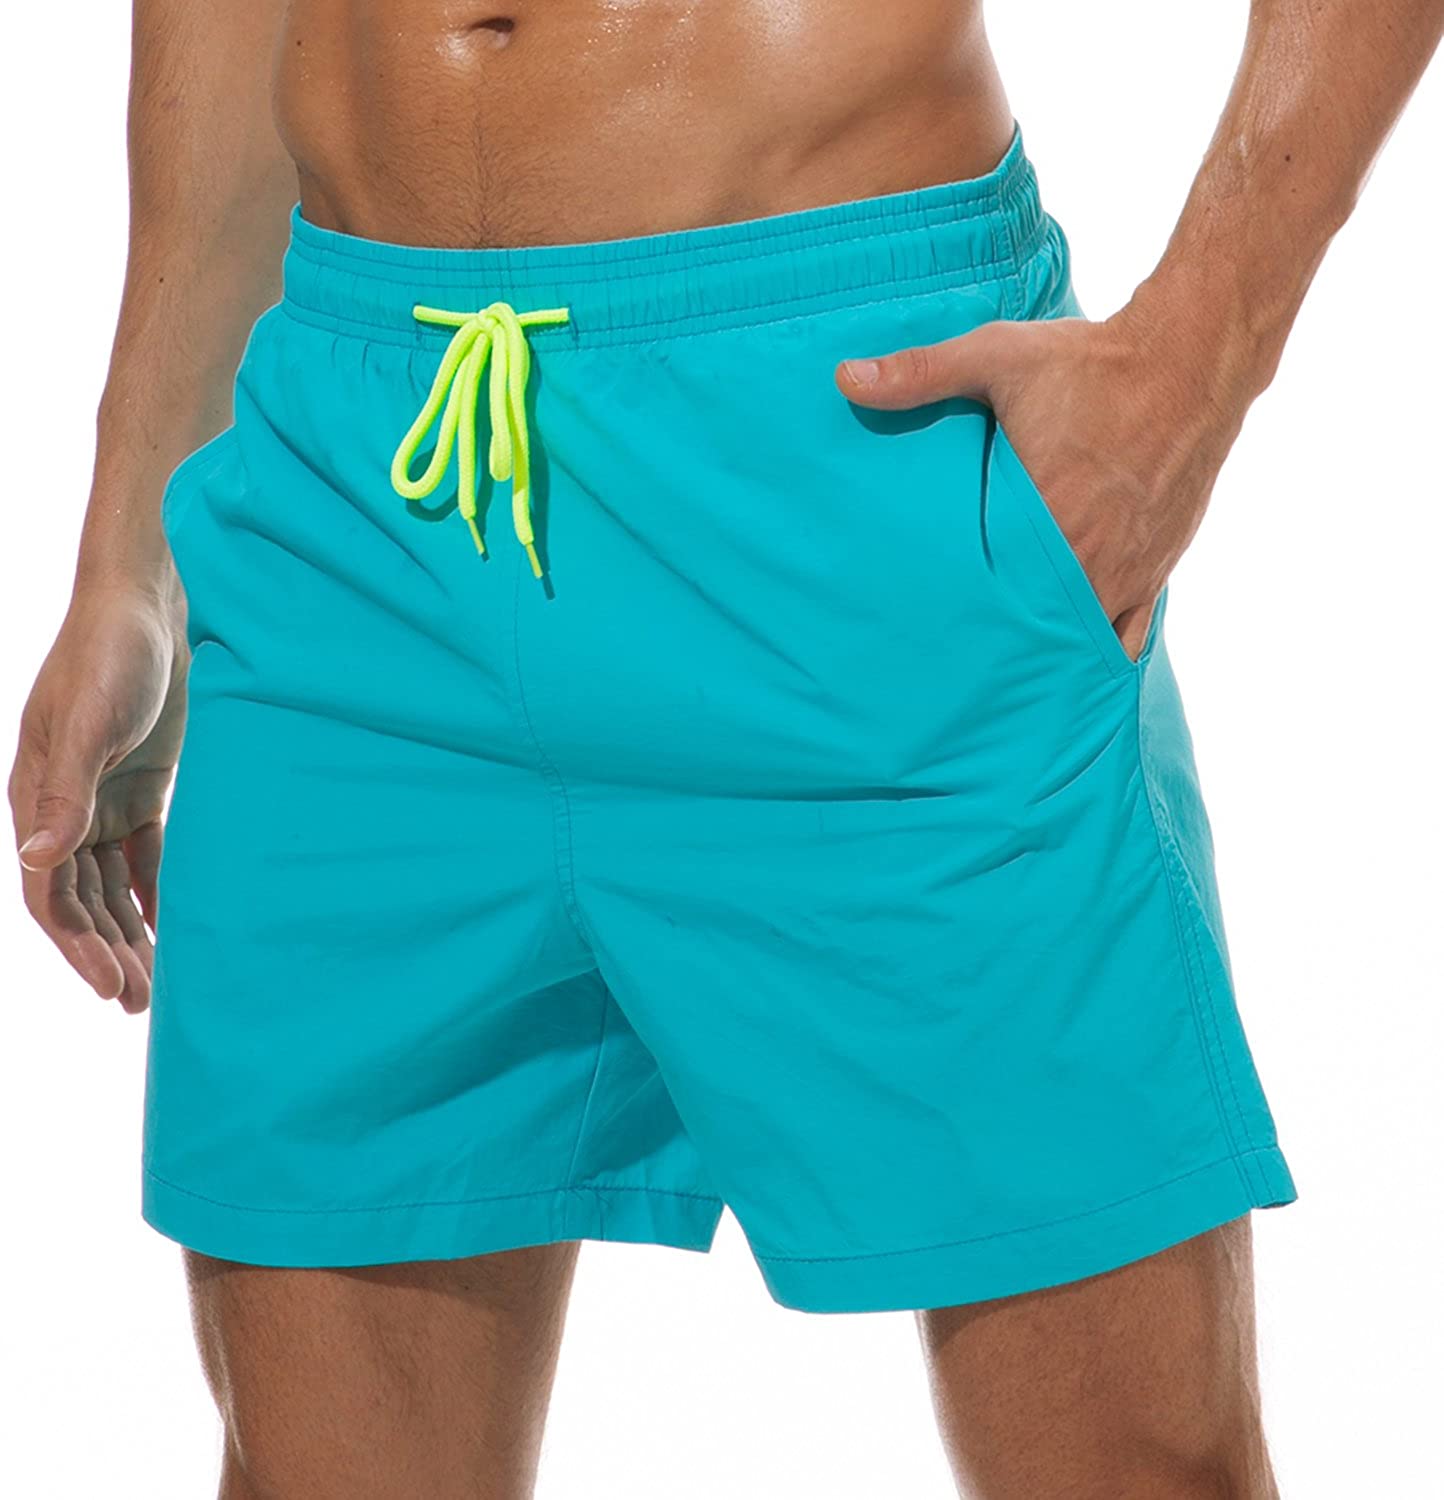 SILKWORLD Men's Swim Trunks Quick Dry Beach Shorts with Pockets | eBay